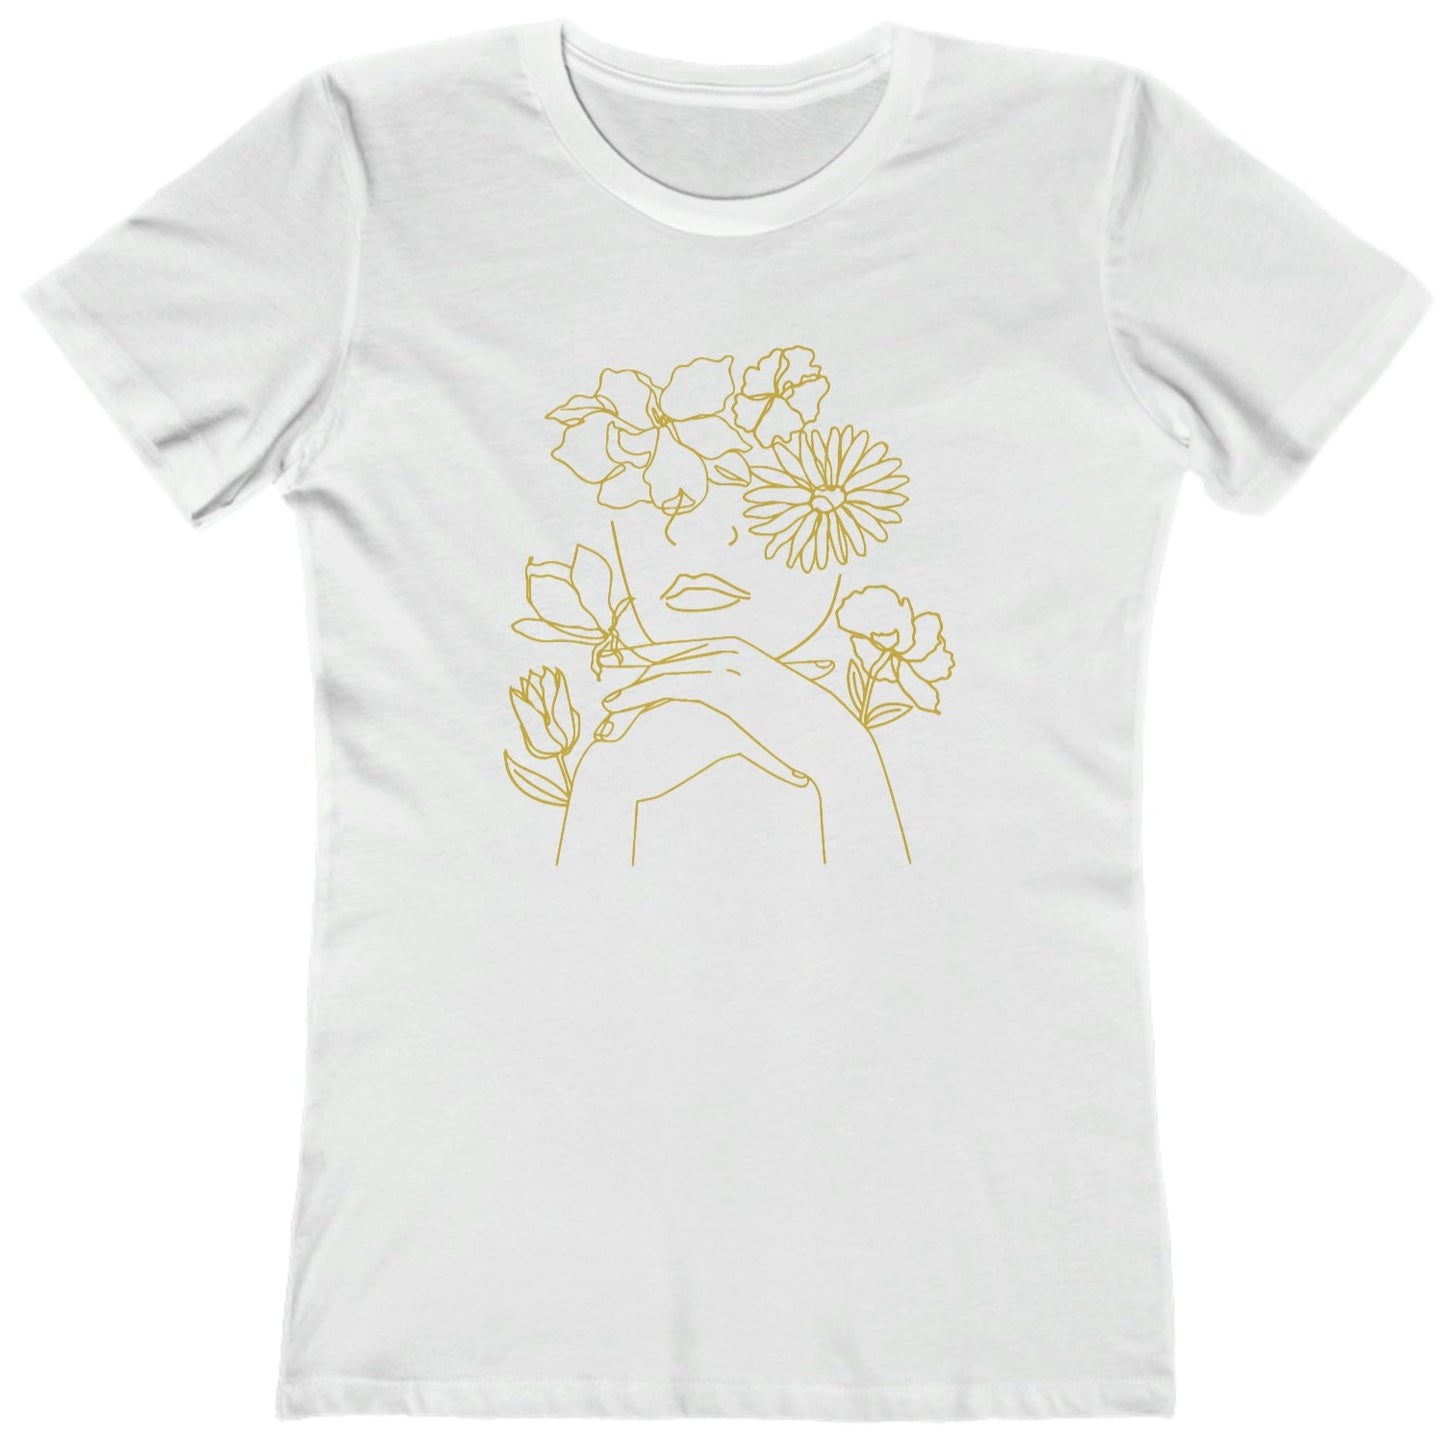 Woman Among the Flowers - Women's T-Shirt